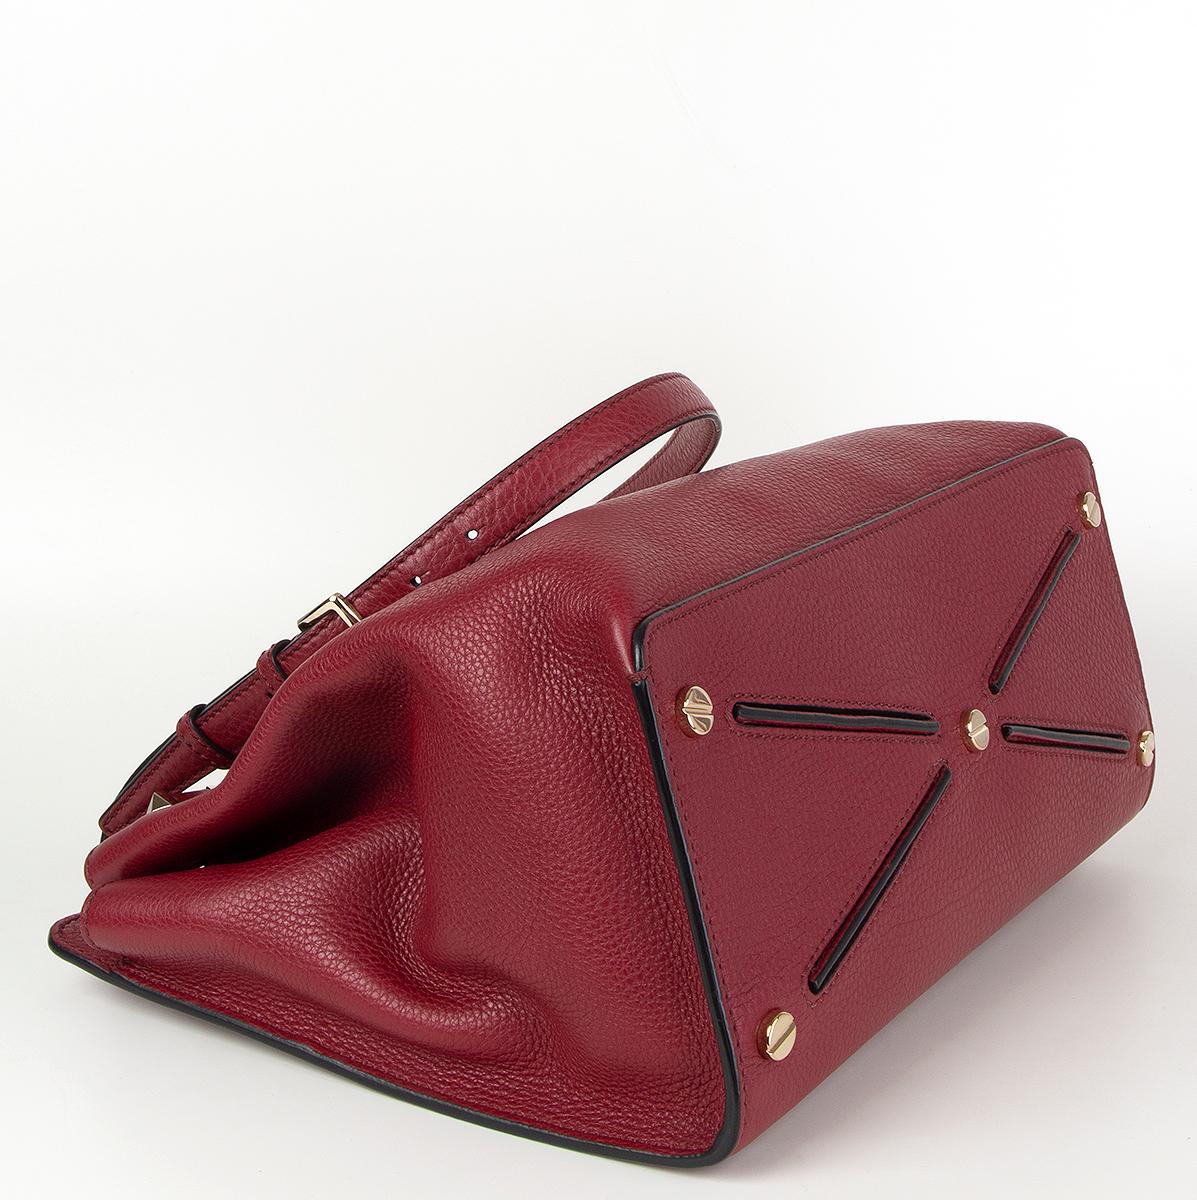 Brown VALENTINO dark red leather JOYLOCK MEDIUM Top Handle Bag